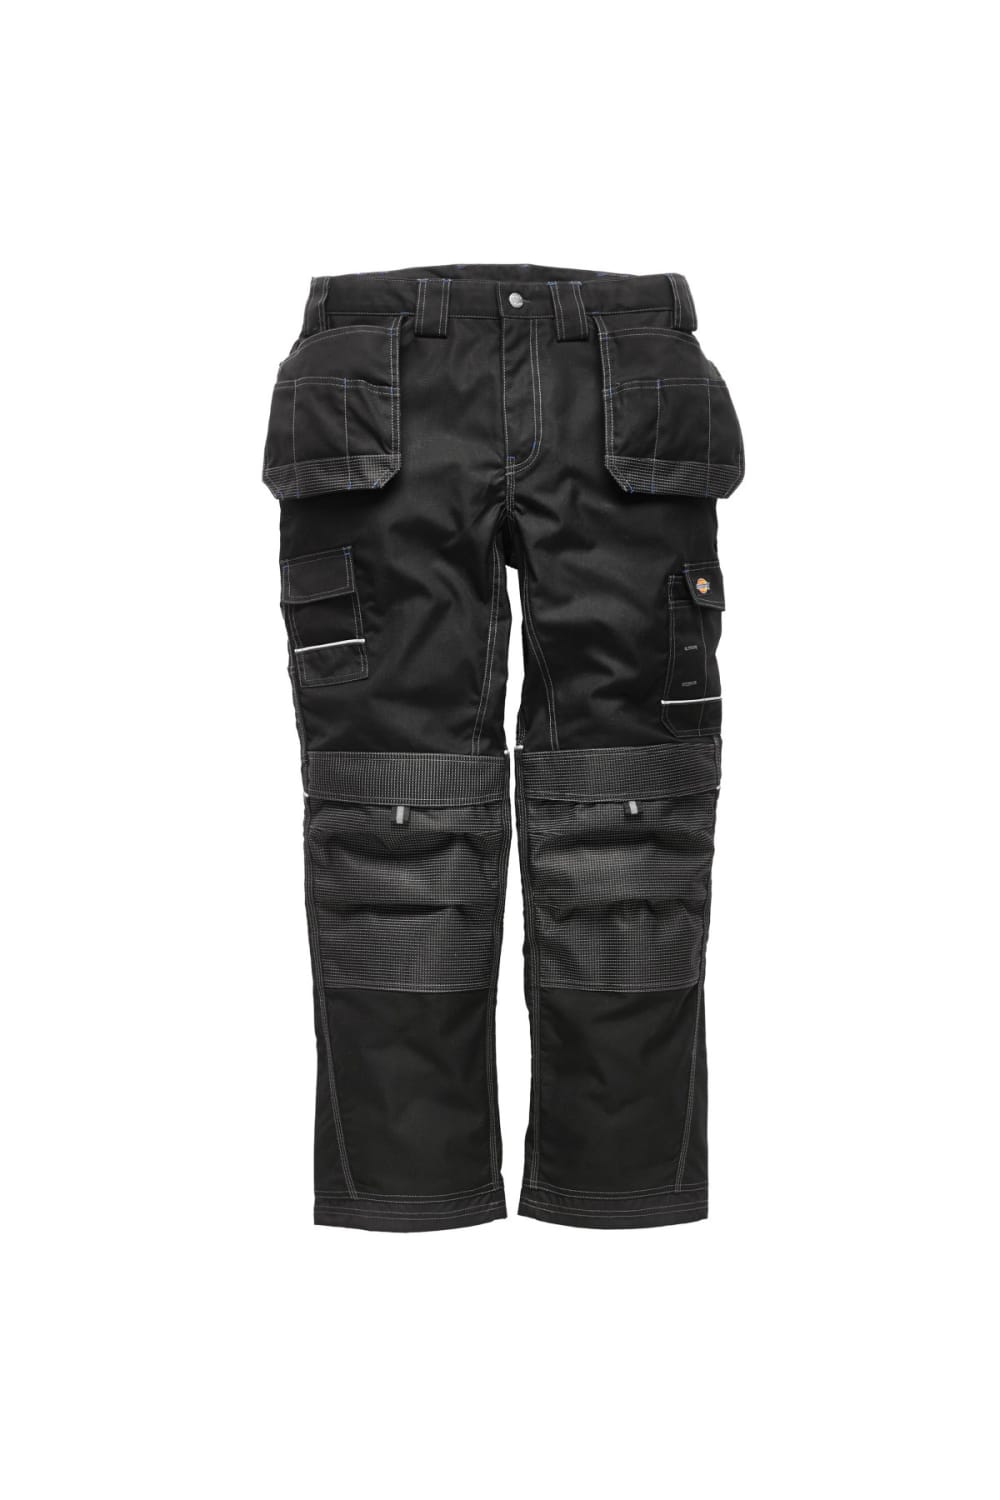 Dickies Mens Eisenhower Max Workwear Trousers (Short, Regular and Tall) (Black)